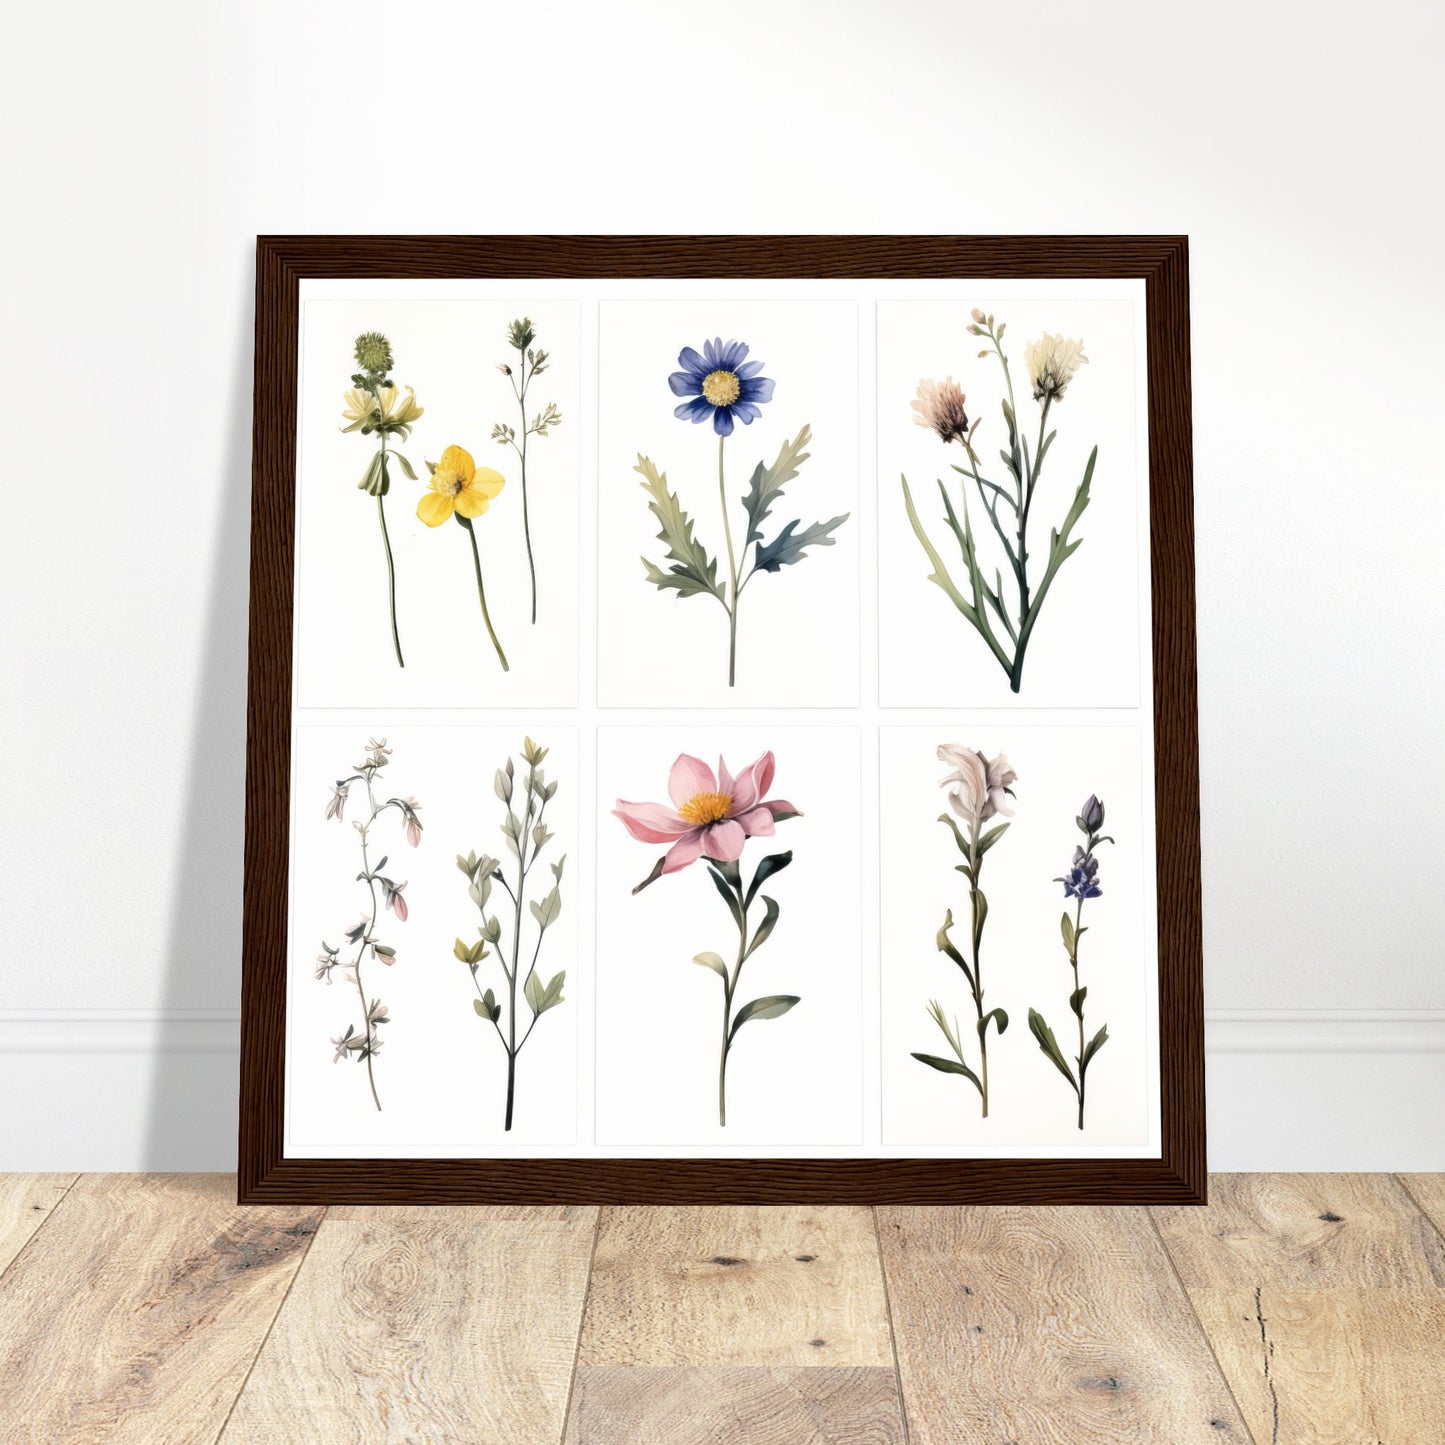 Elegance - Botanical Artwork #4- Print Room Ltd Wood frame 70x70 cm / 28x28"